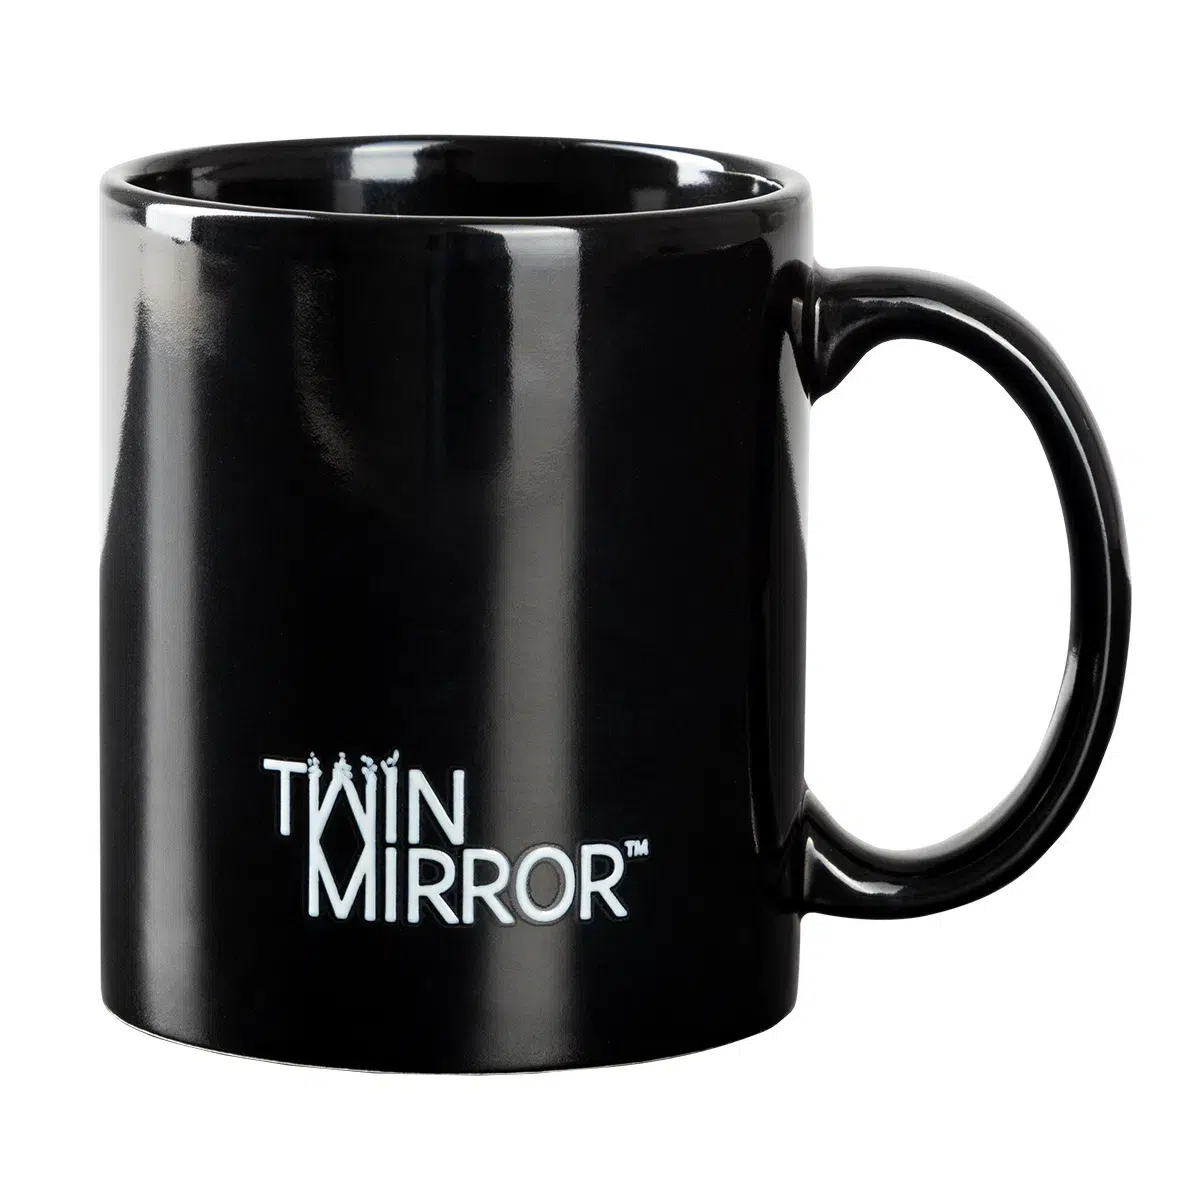 Twin Mirror Mug "Line Art" Image 5